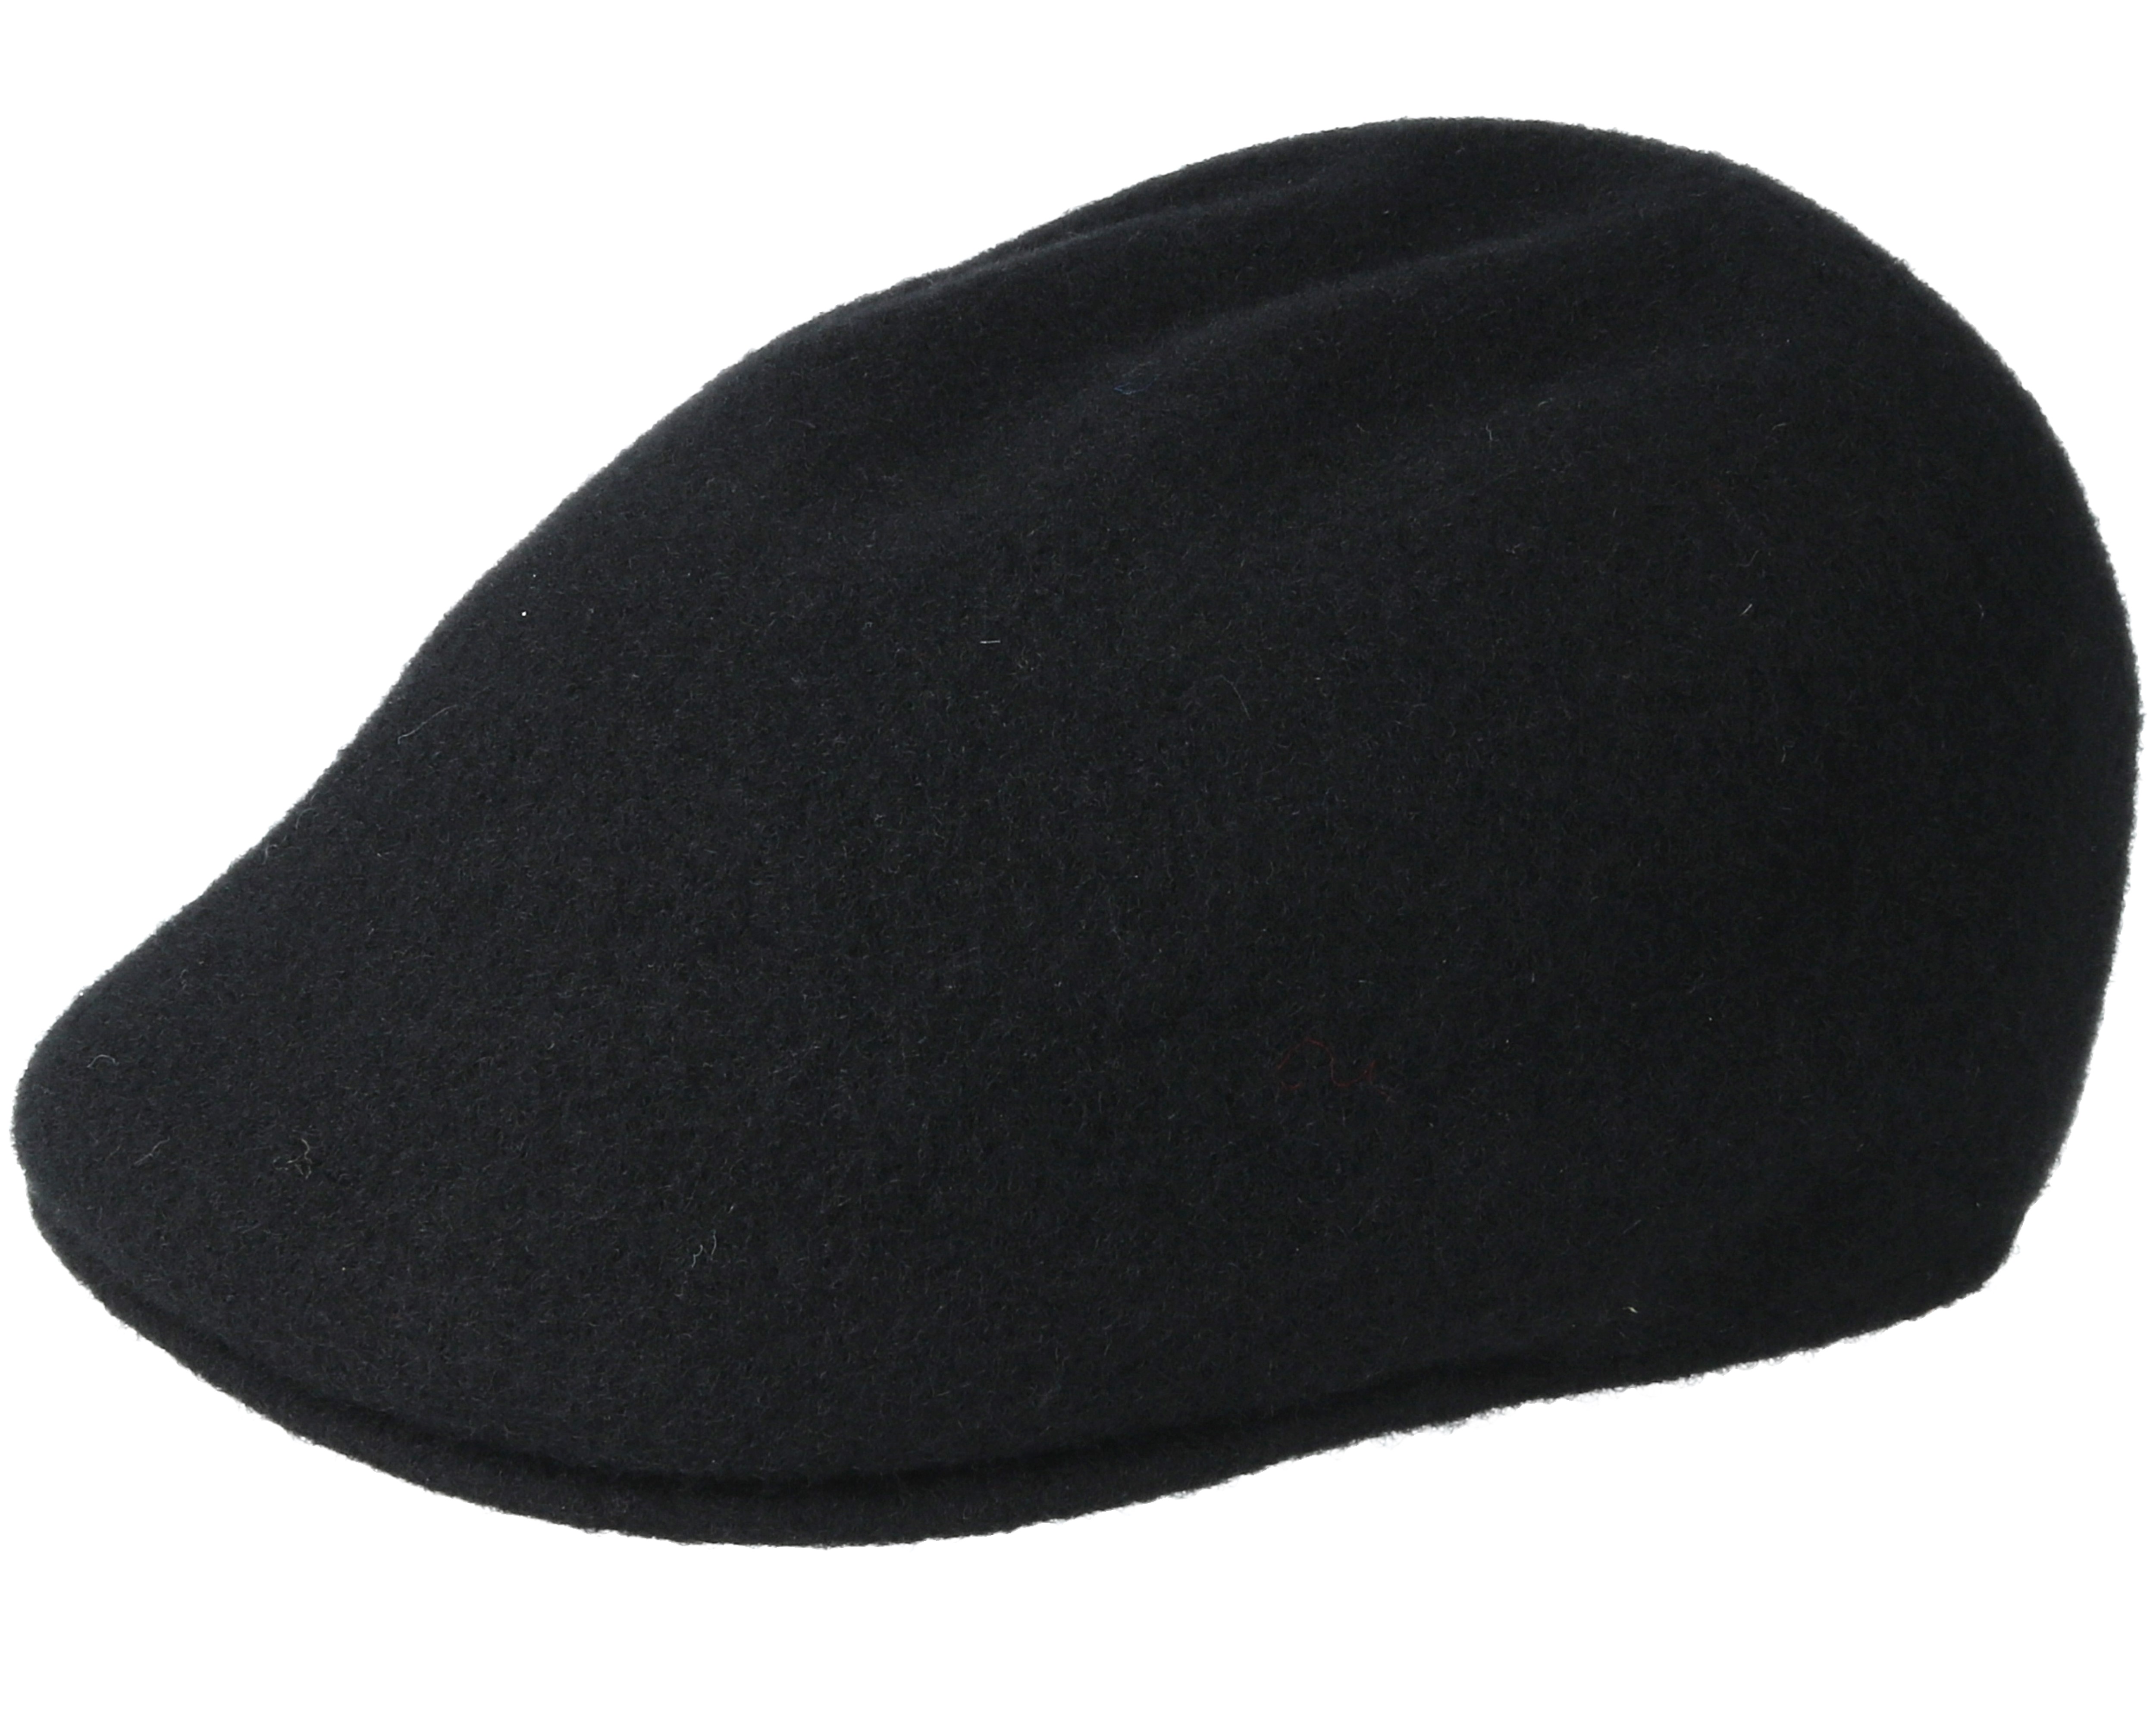 Seamless wool 507 Black Flat Cap - Kangol caps | Hatstore.co.uk